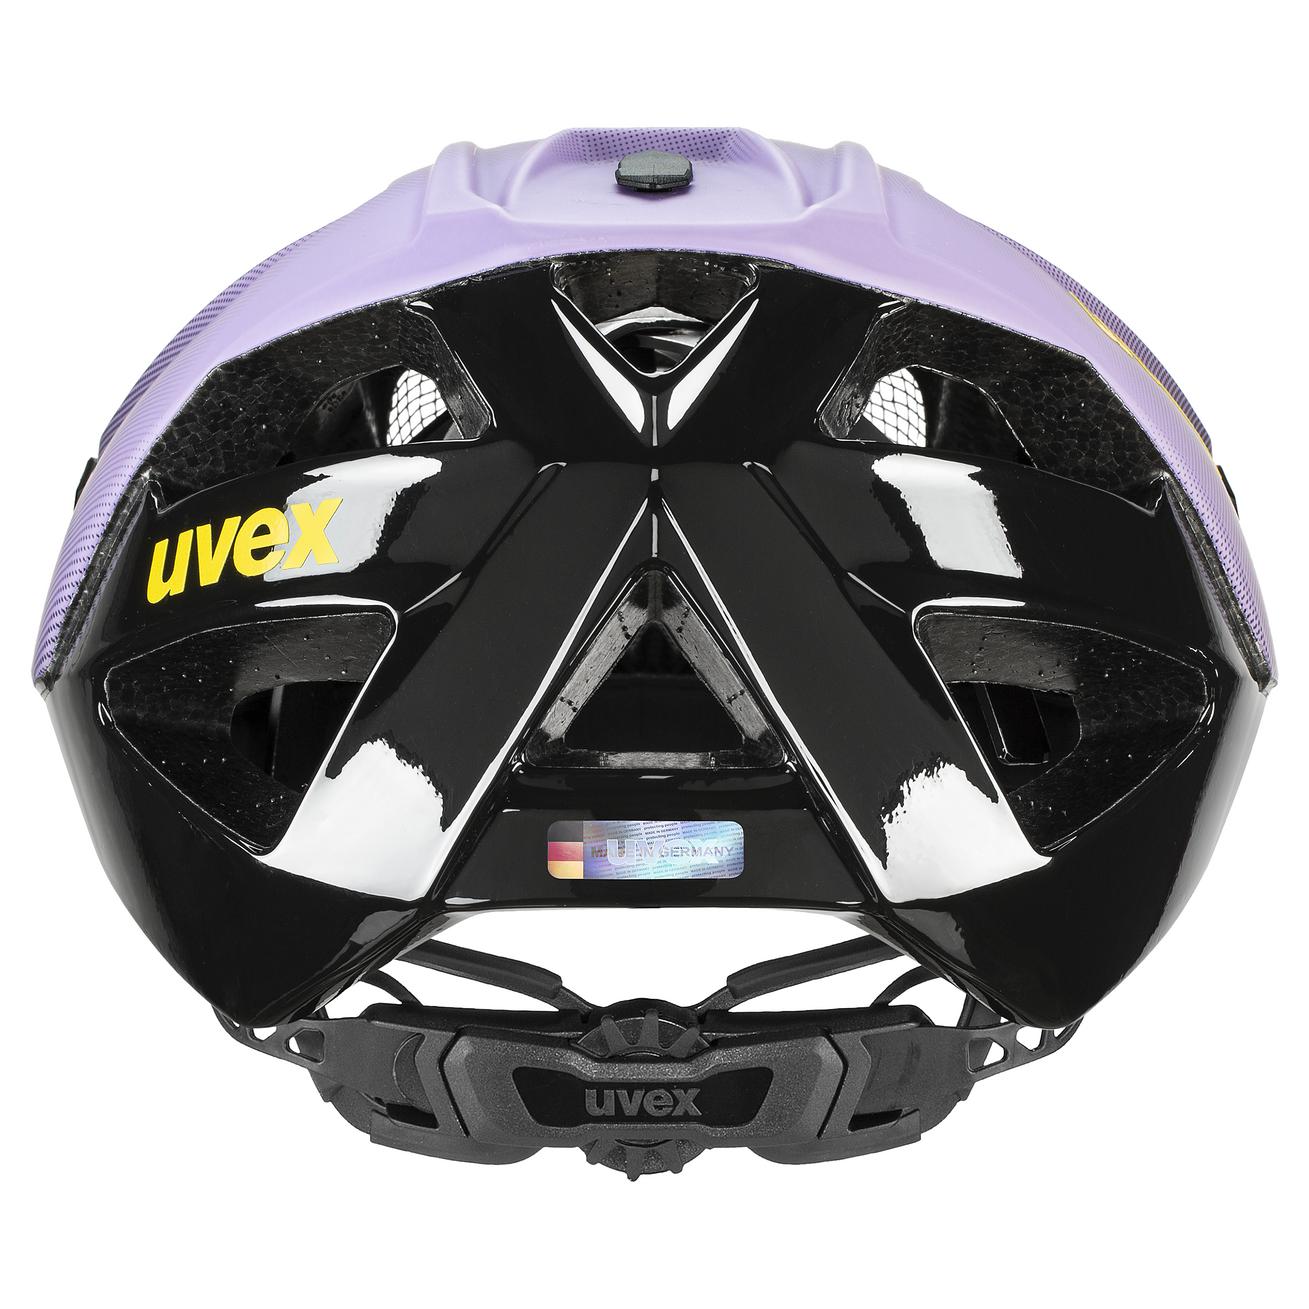 UVEX Quatro Cc Lilac-black Matt (s4100260700)